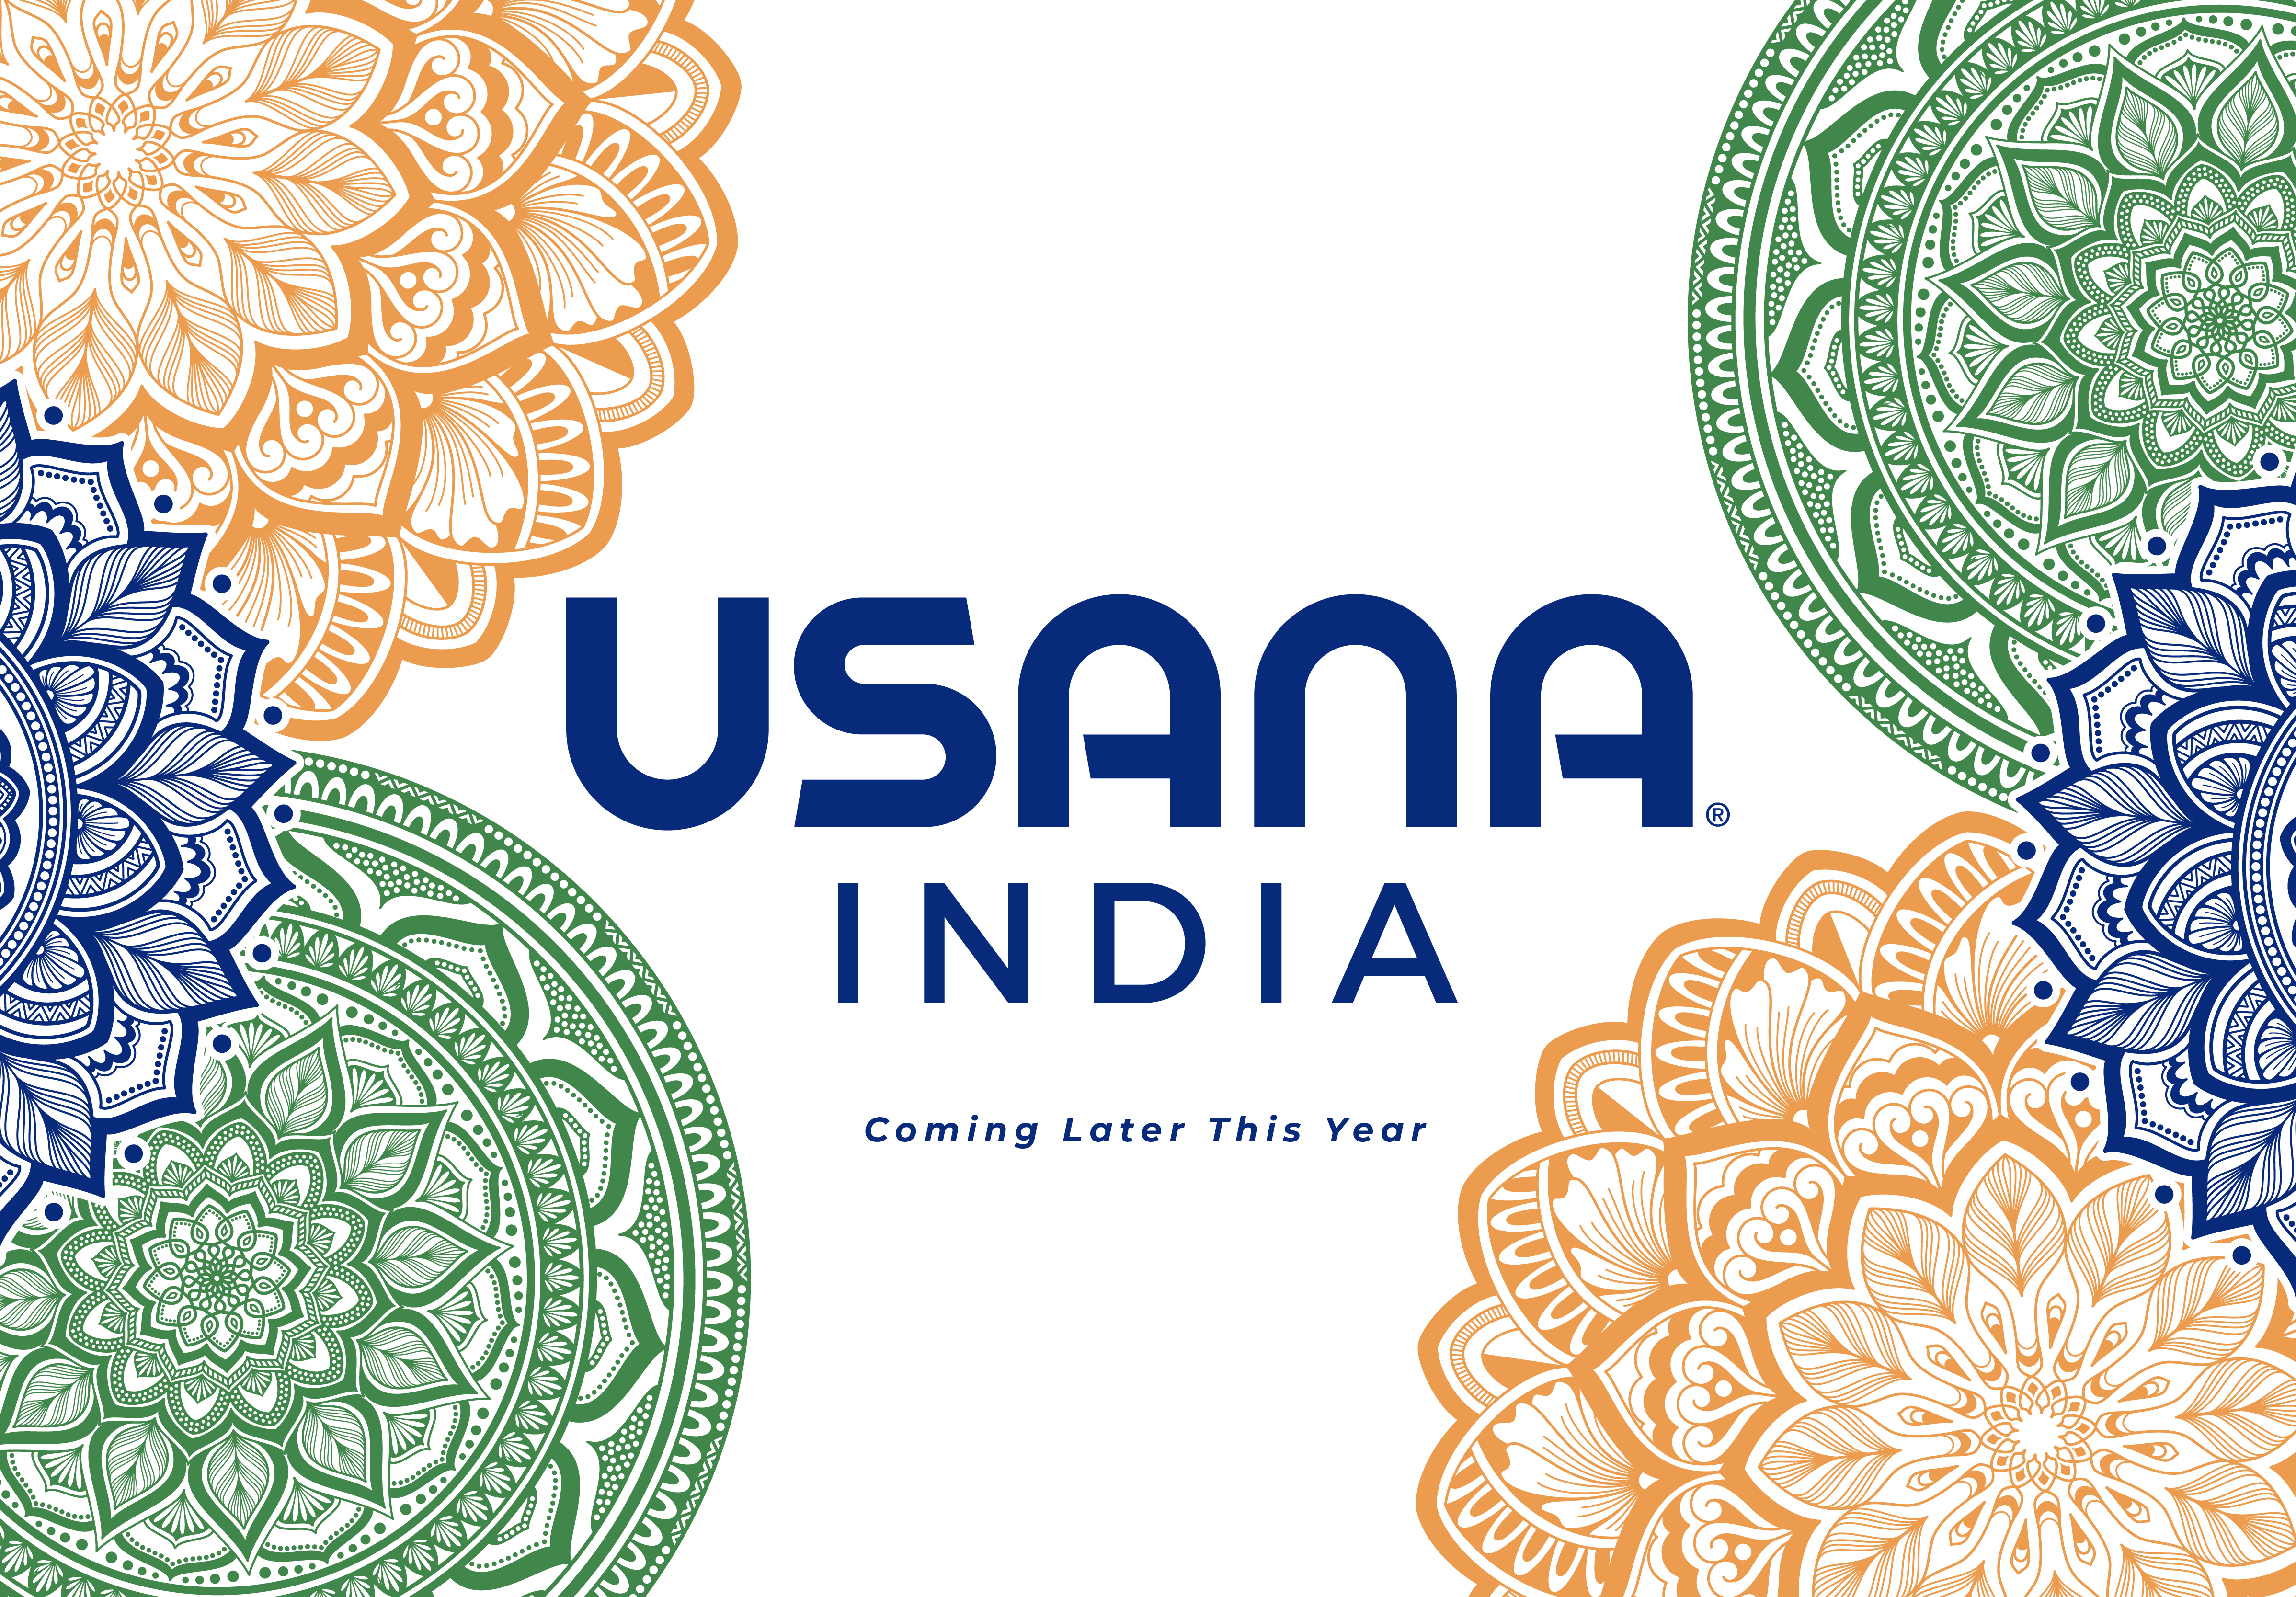 India is joining the USANA Family